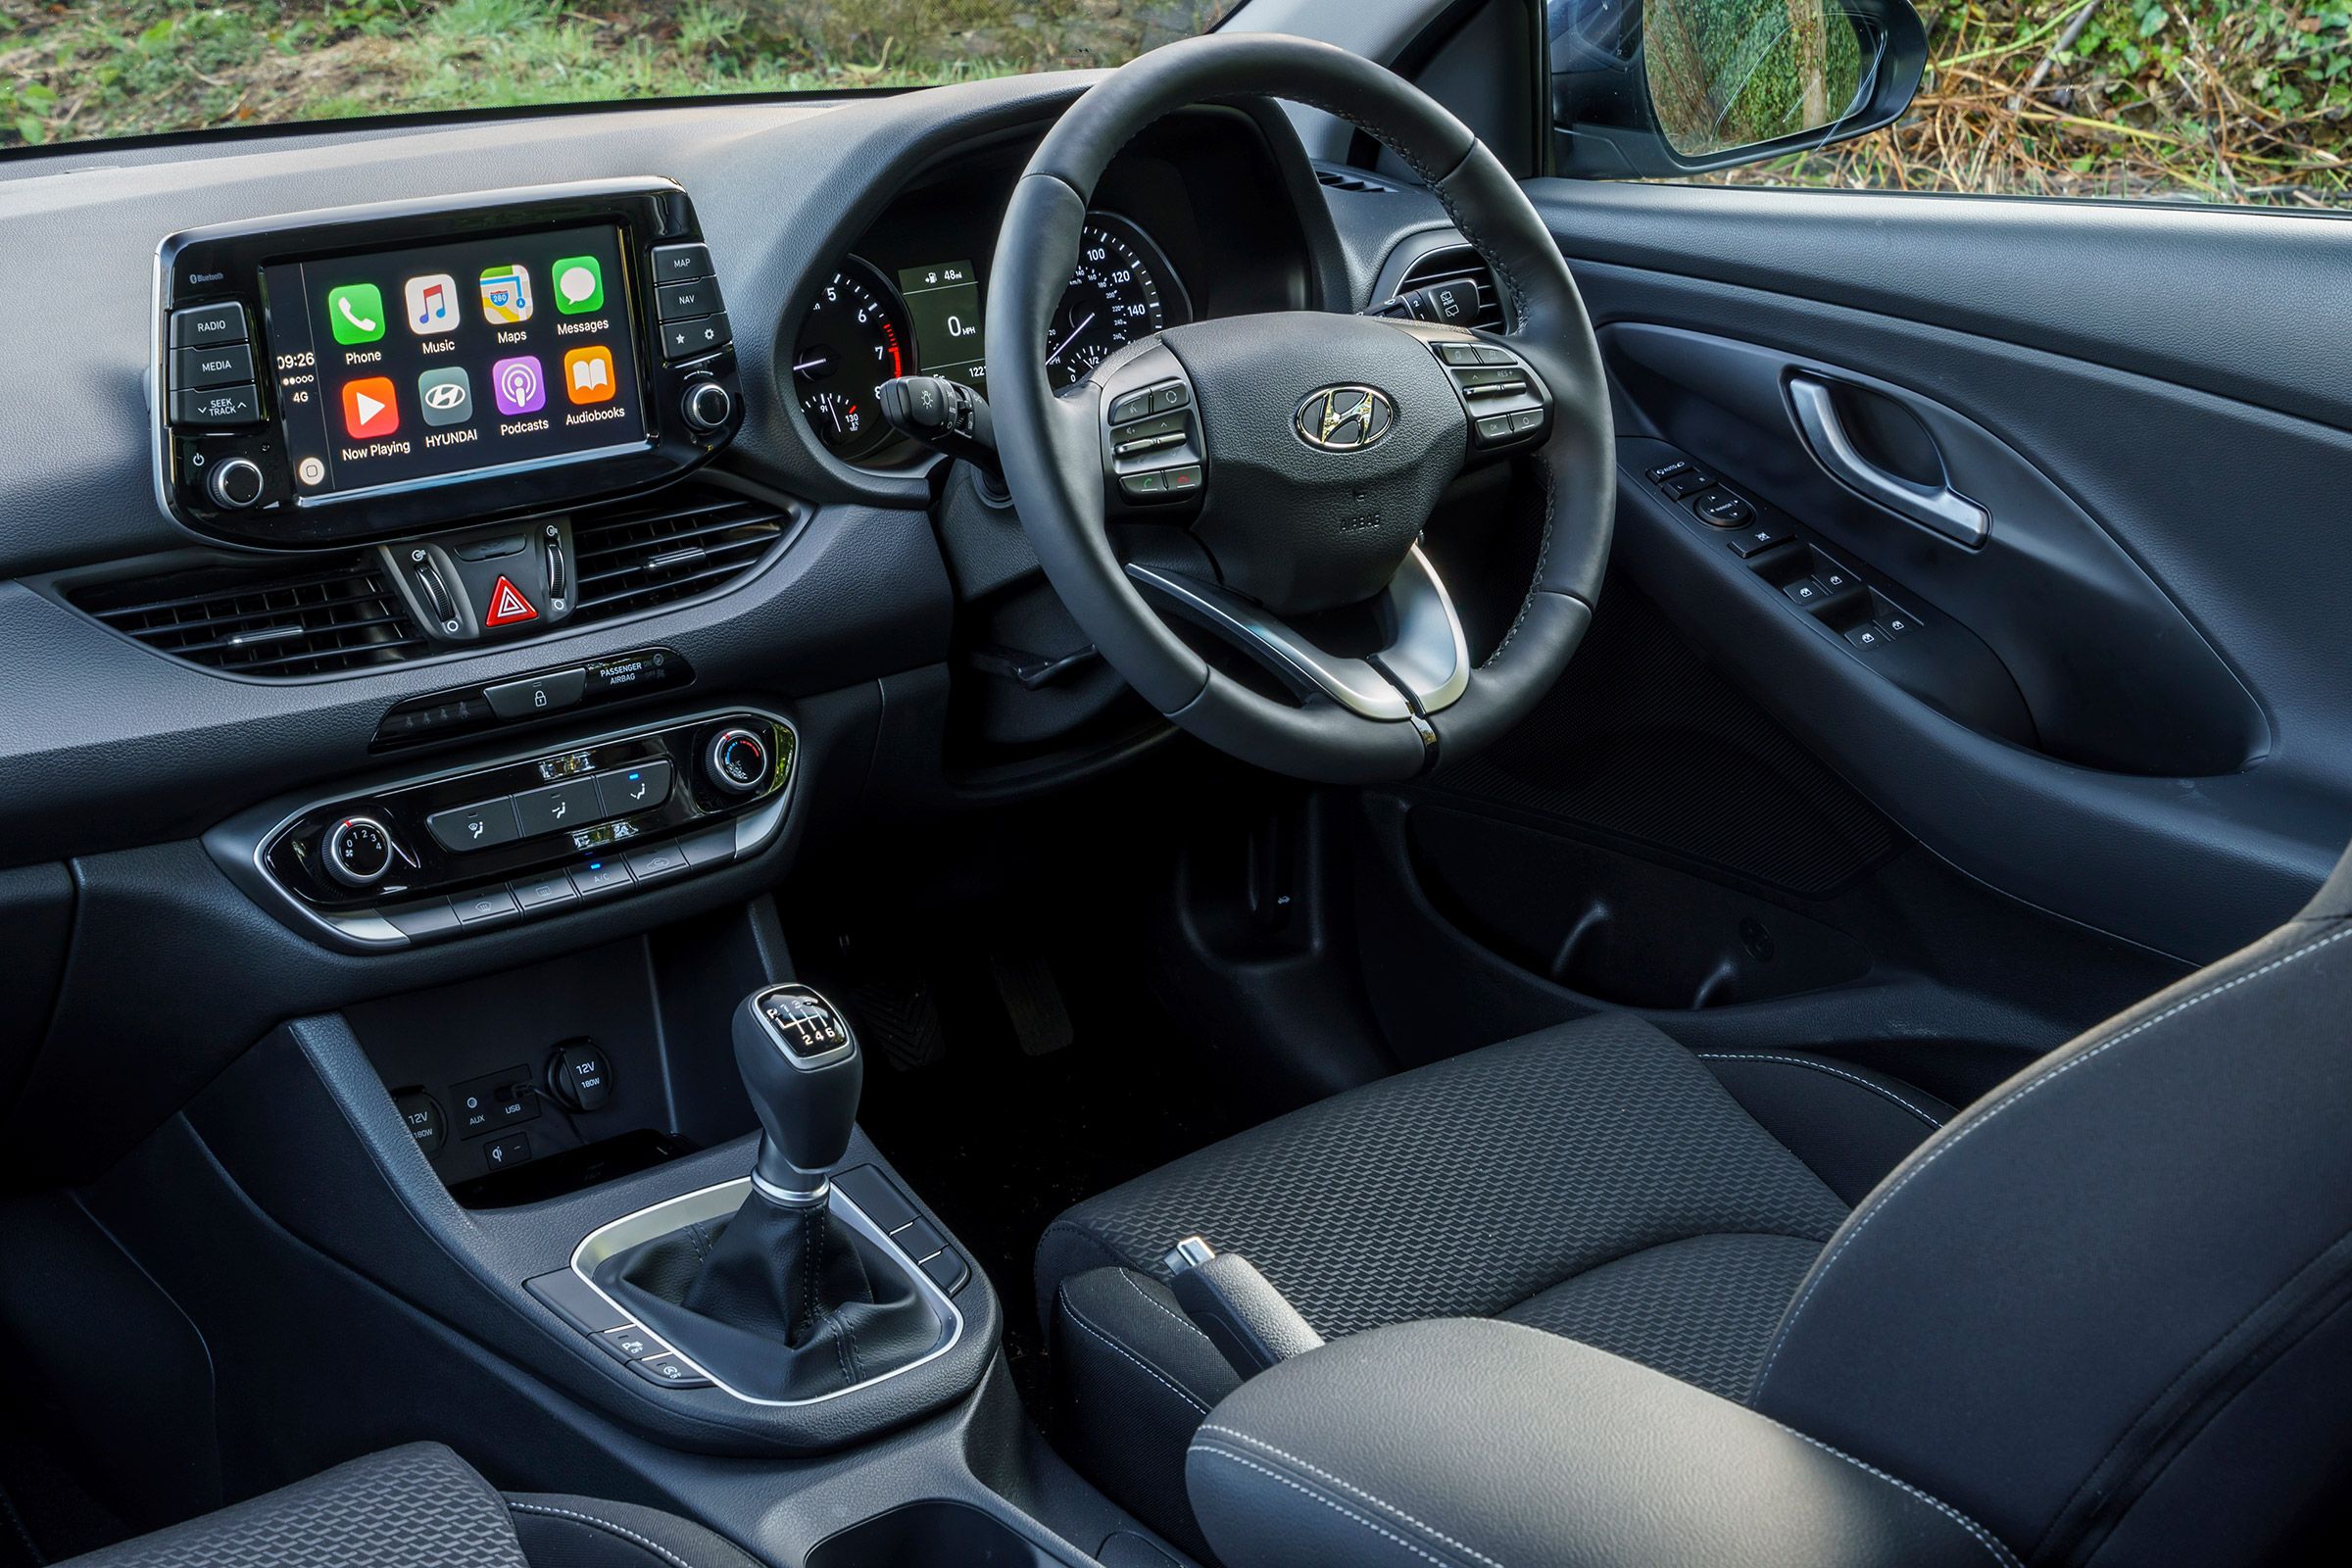 2017 Hyundai I30 Interior Driver Cockpit And Dash (View 20 of 23)